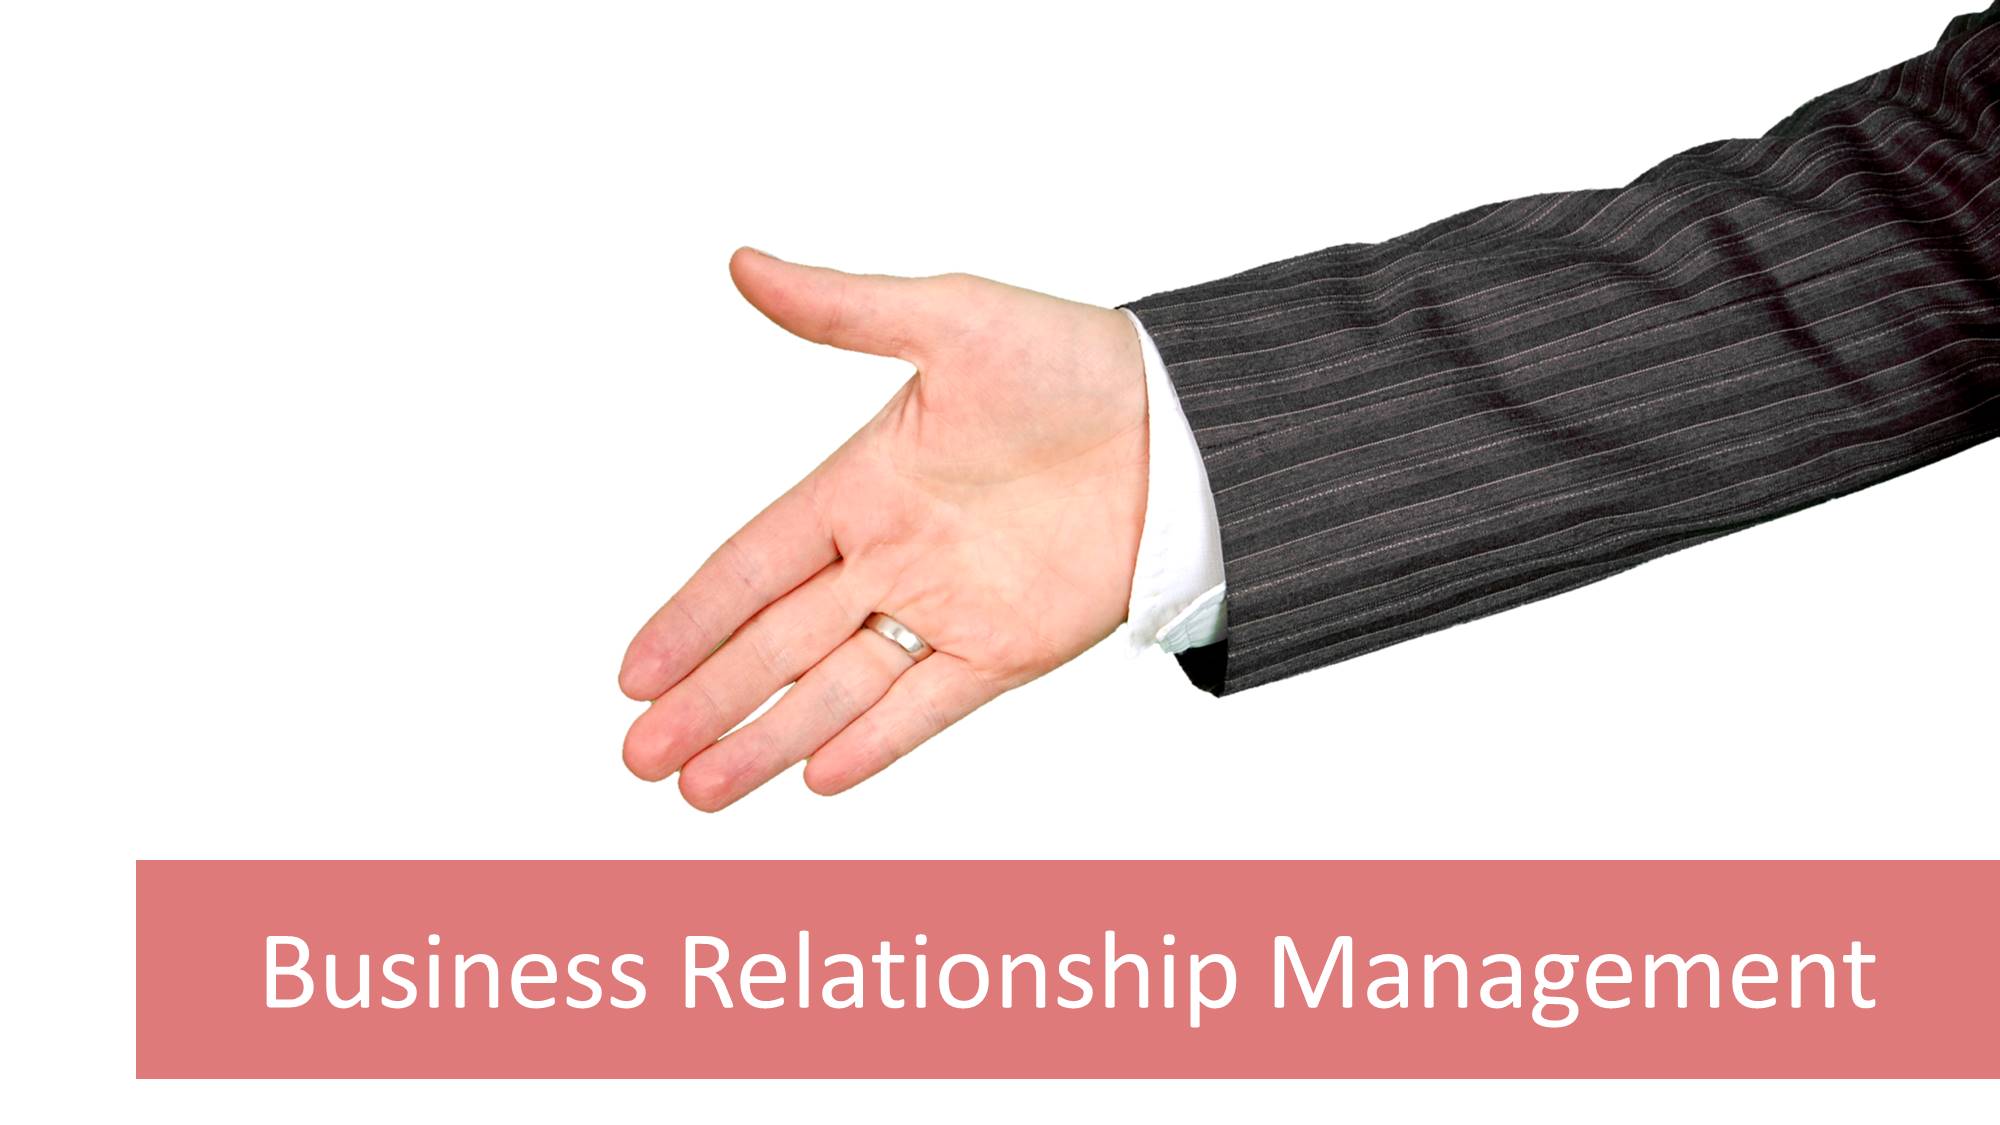 Business relationship management